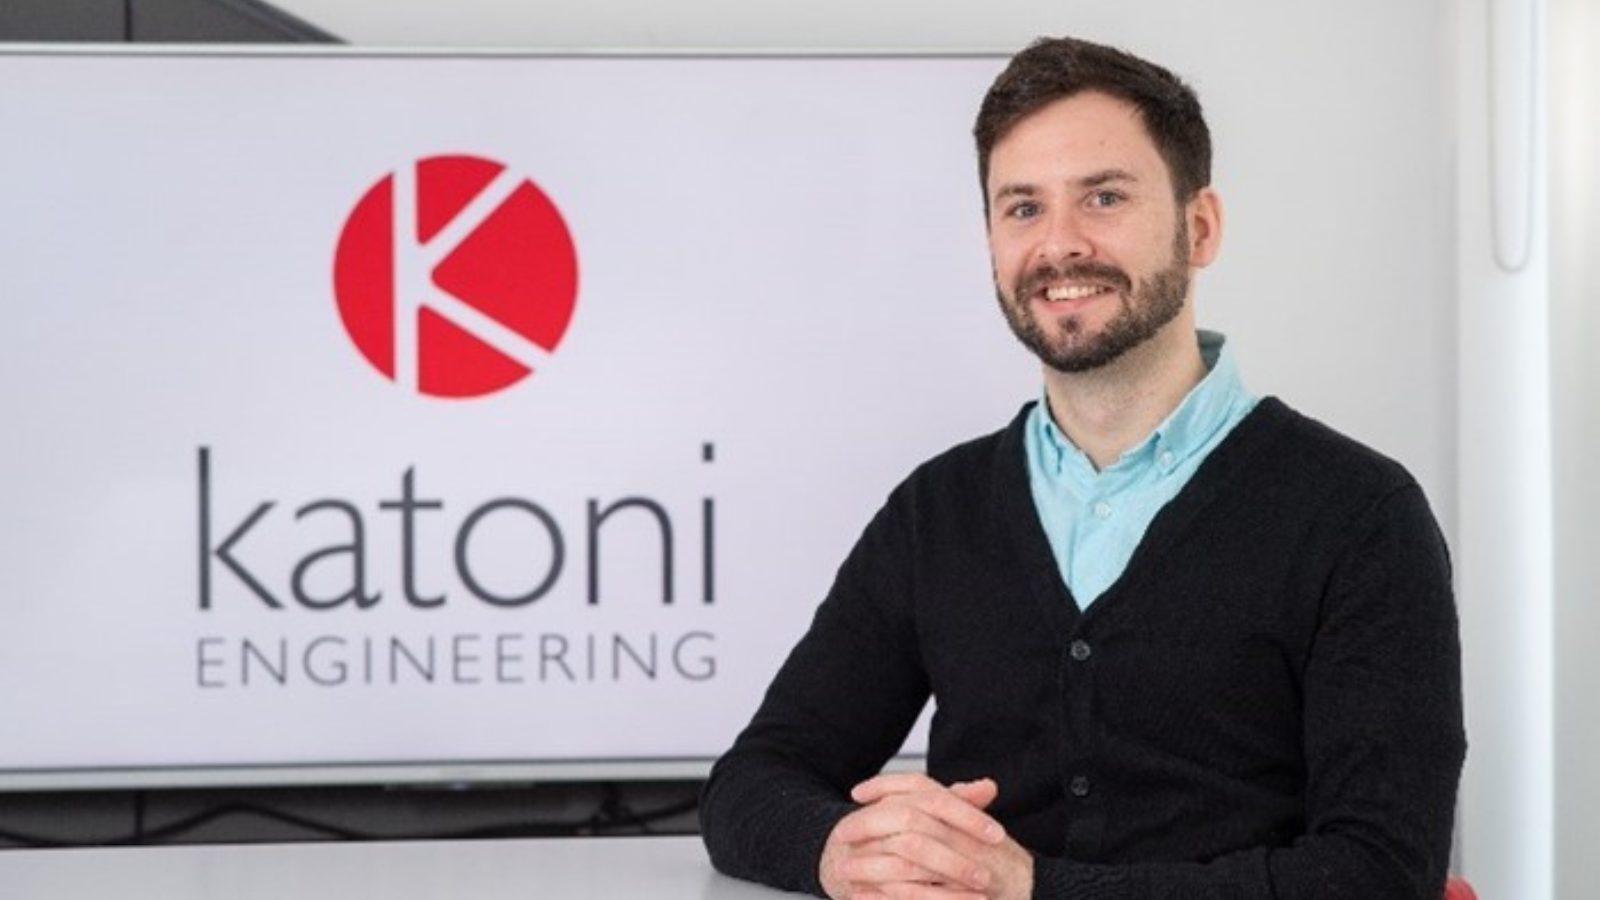 Katoni Engineering builds on environmental plans following net zero training